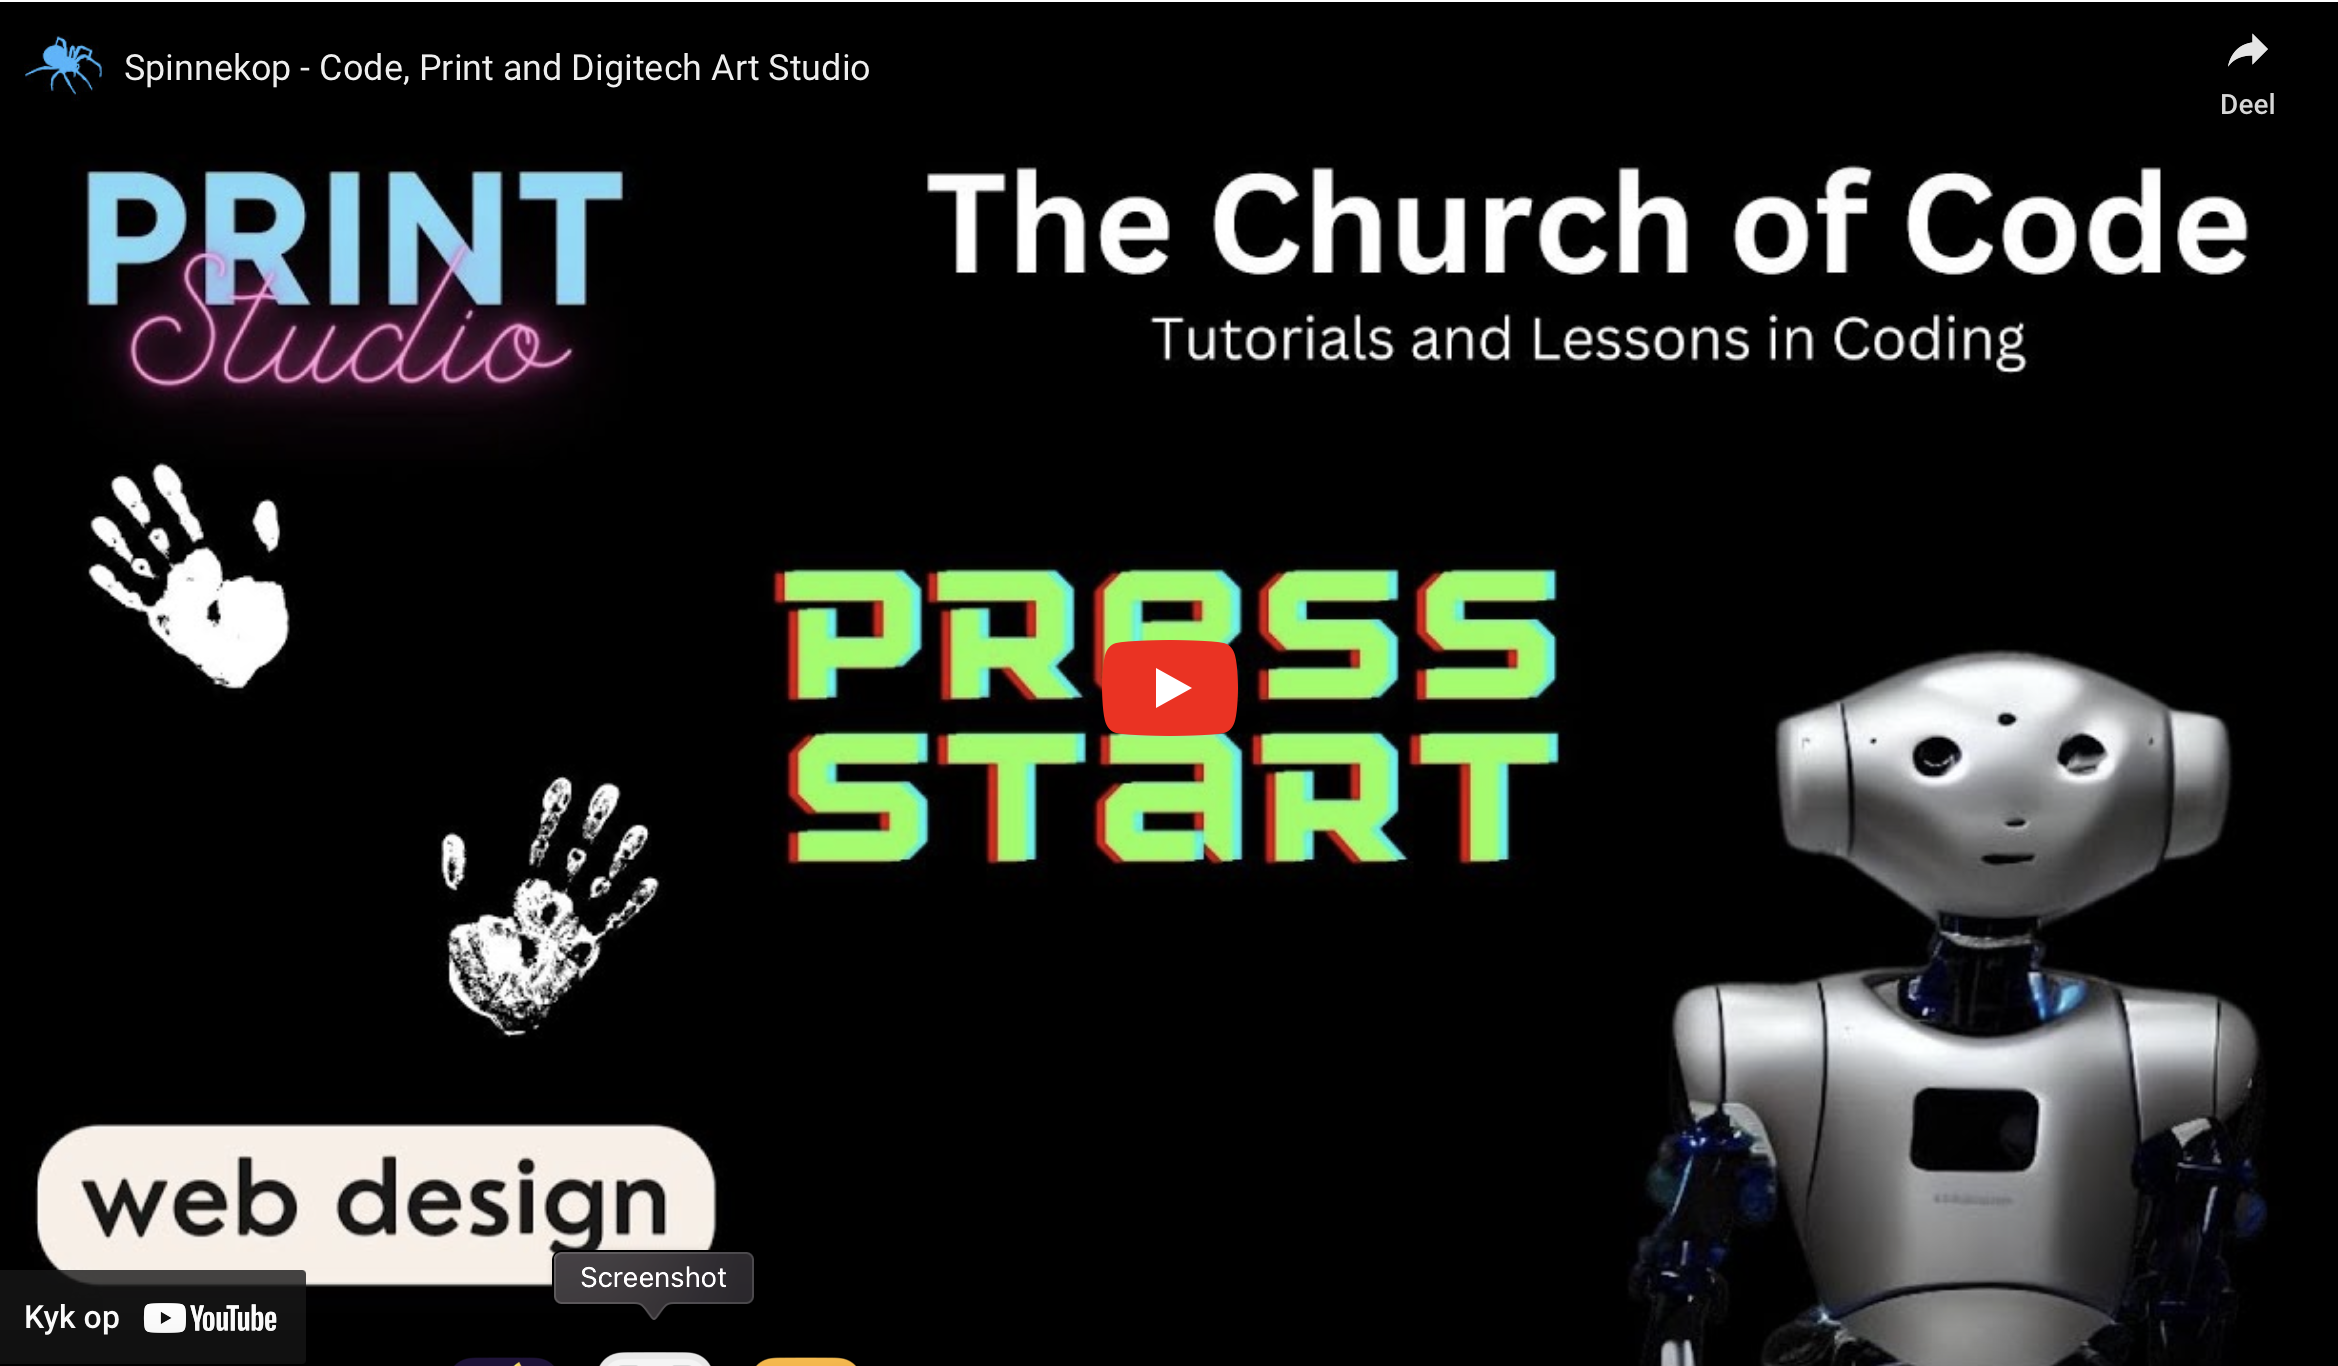 Studi ad

The Church of Code

ES Spinnekop - Code, Print and Digitech Art
PRIN | Tutorials and Lessons in Coding

 

NY
©» i
NE 3

N—
Vf
|

web desig

Screenshot

h -
]
|
: -
1)

     

Kyk op 3 YouTube